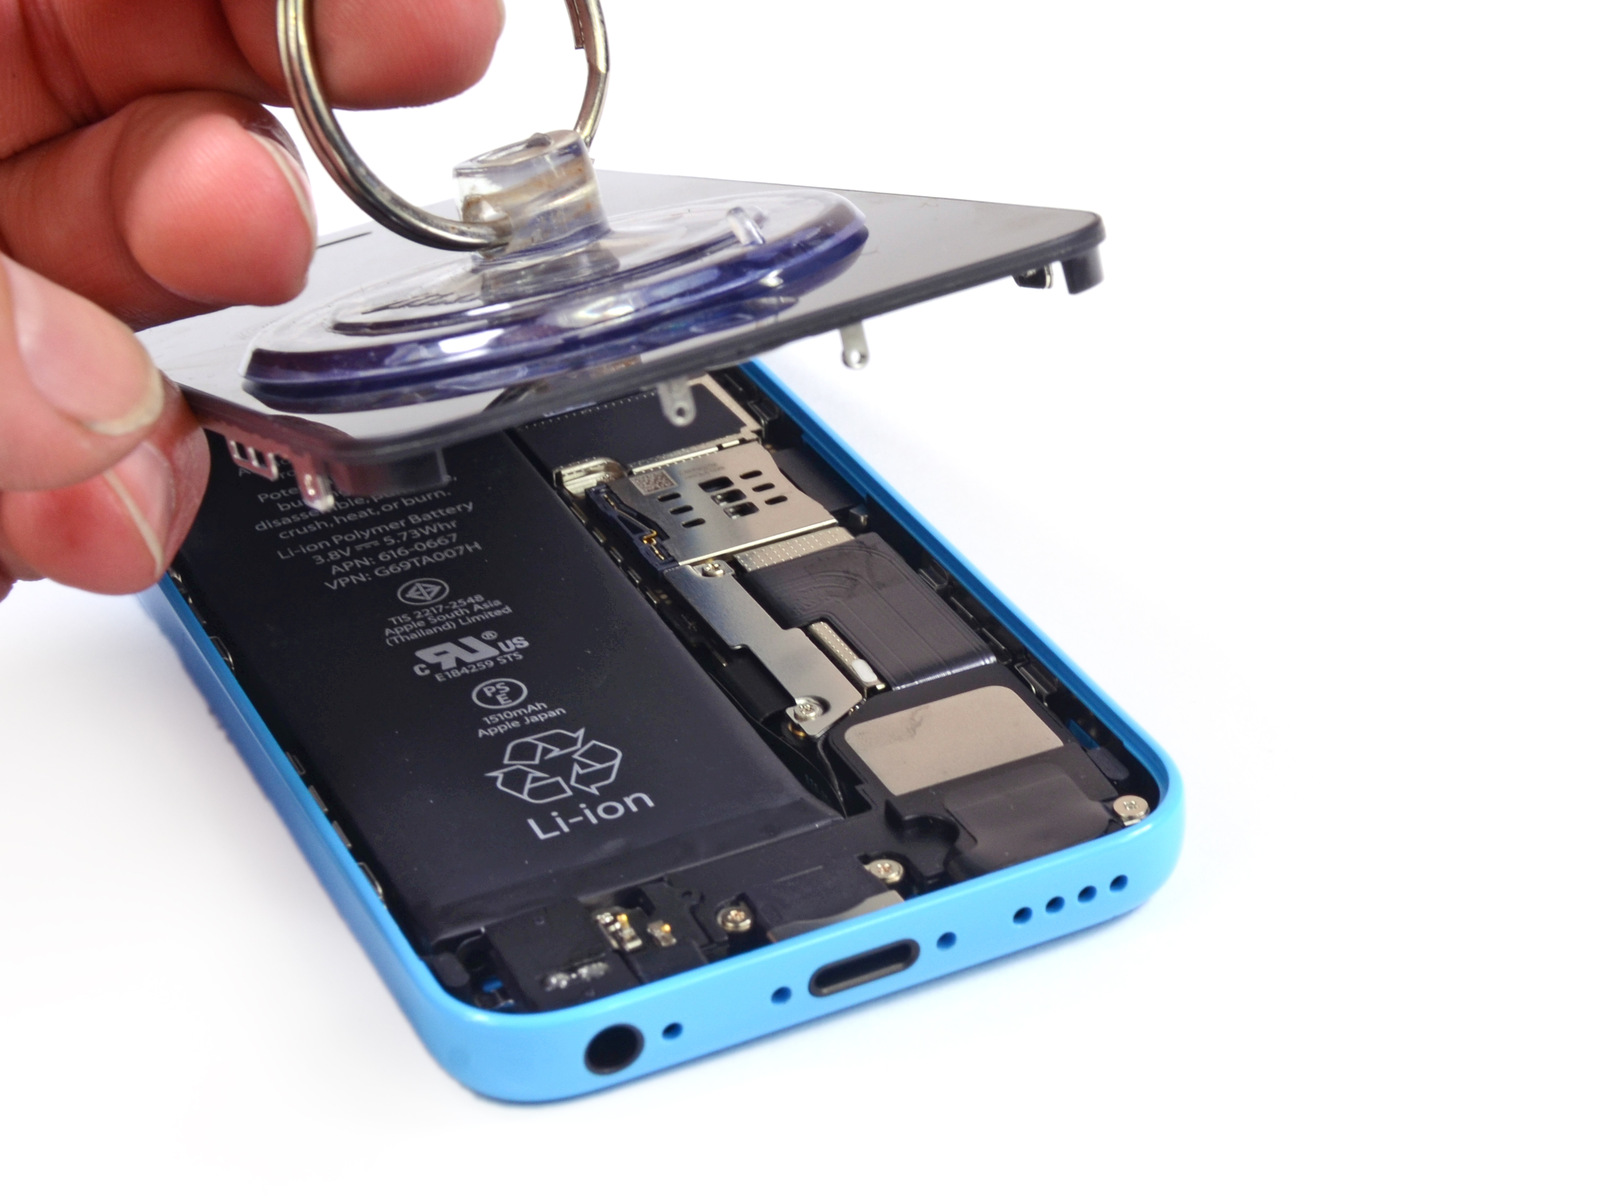 iPhone 5c (blue, iFixit teardown 001)